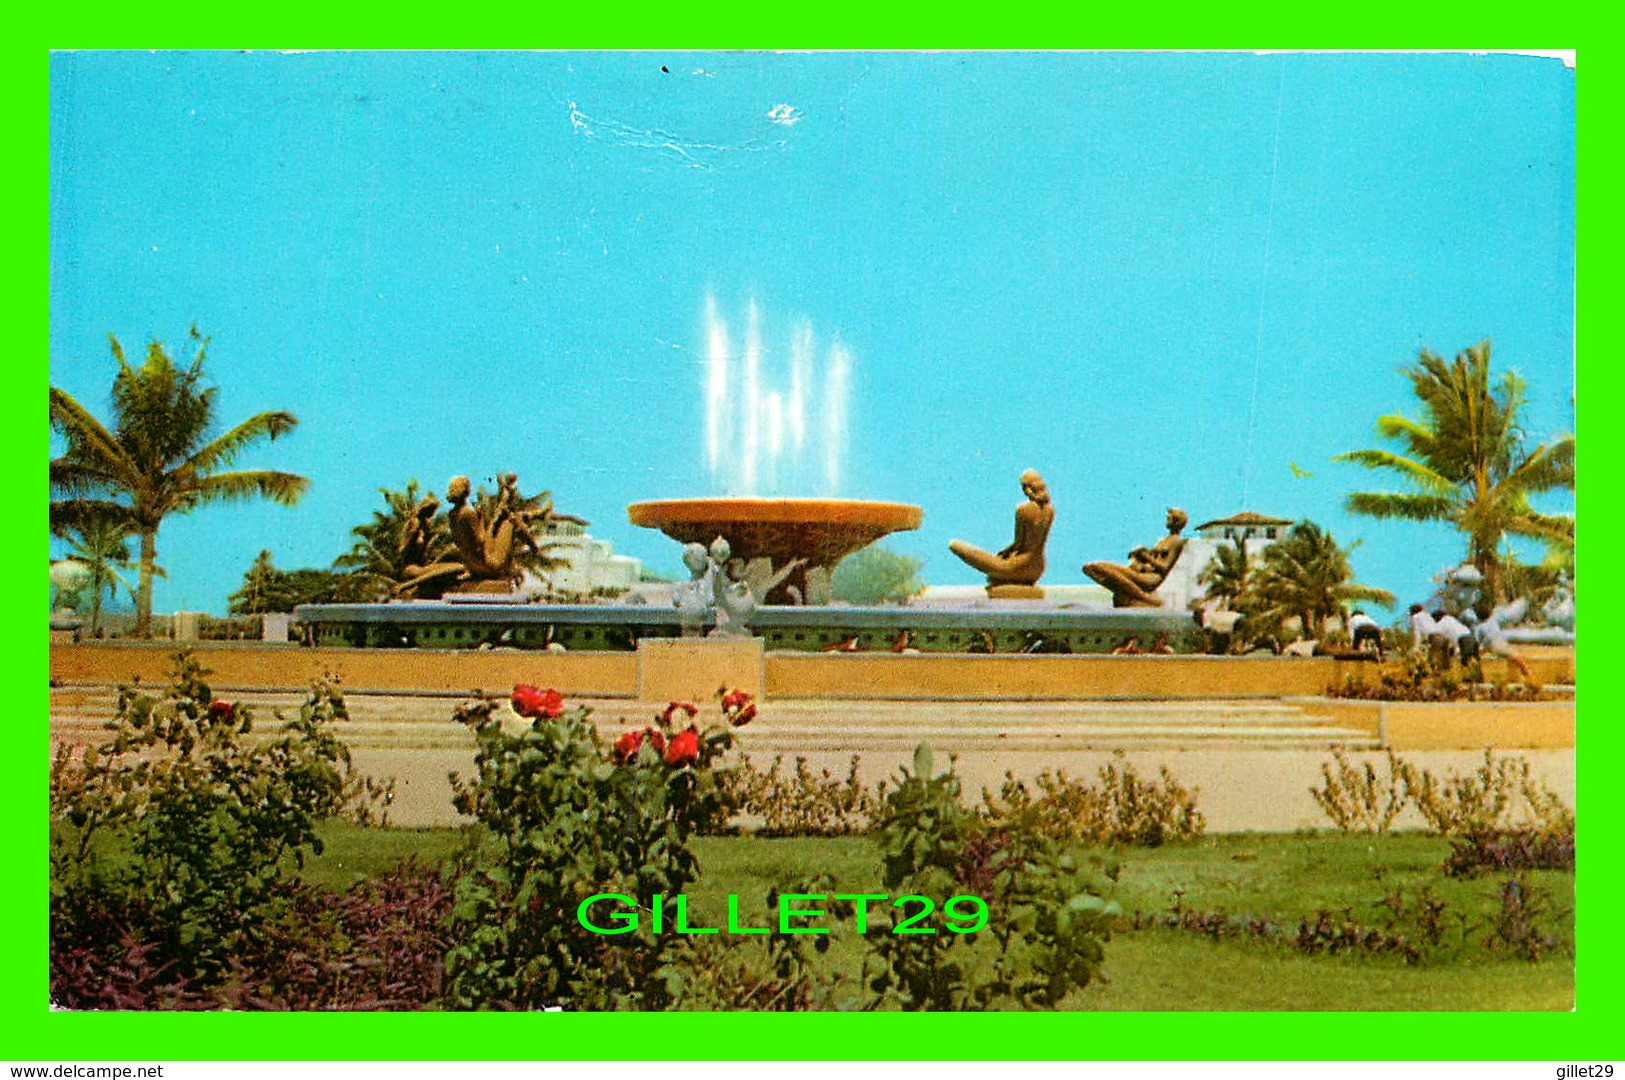 PORT-AU-PRINCE, HAITI - JET D'EAU BI-CENTENAIRE - CIRCULÉE EN 1972 - EDITION PAUL COUBA - - Haïti